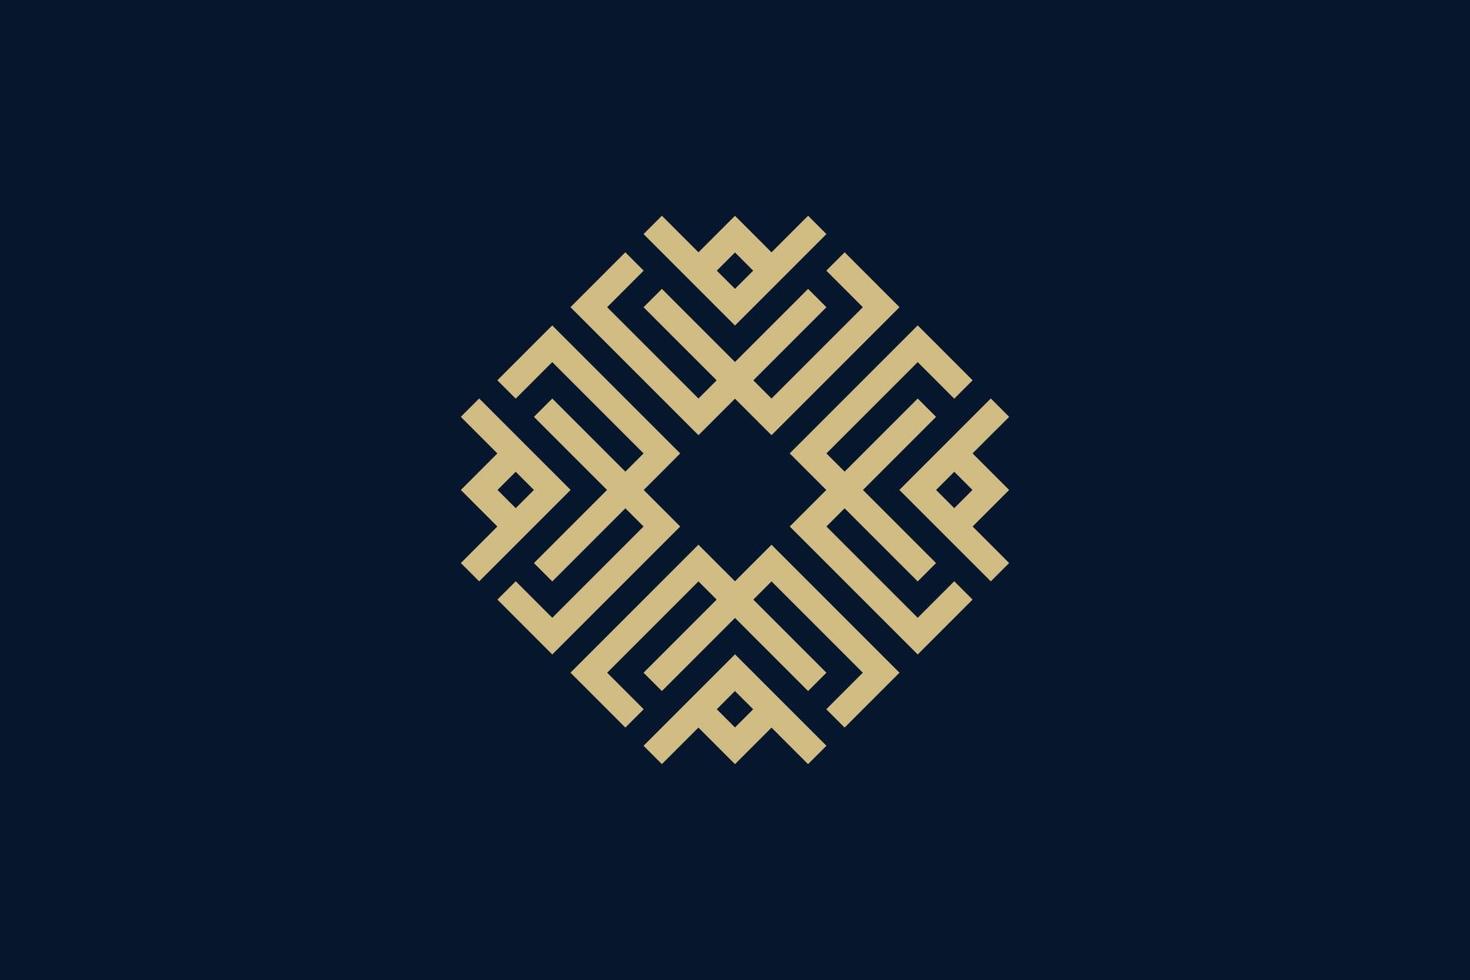 antico labirinto simbolo logo design vettore